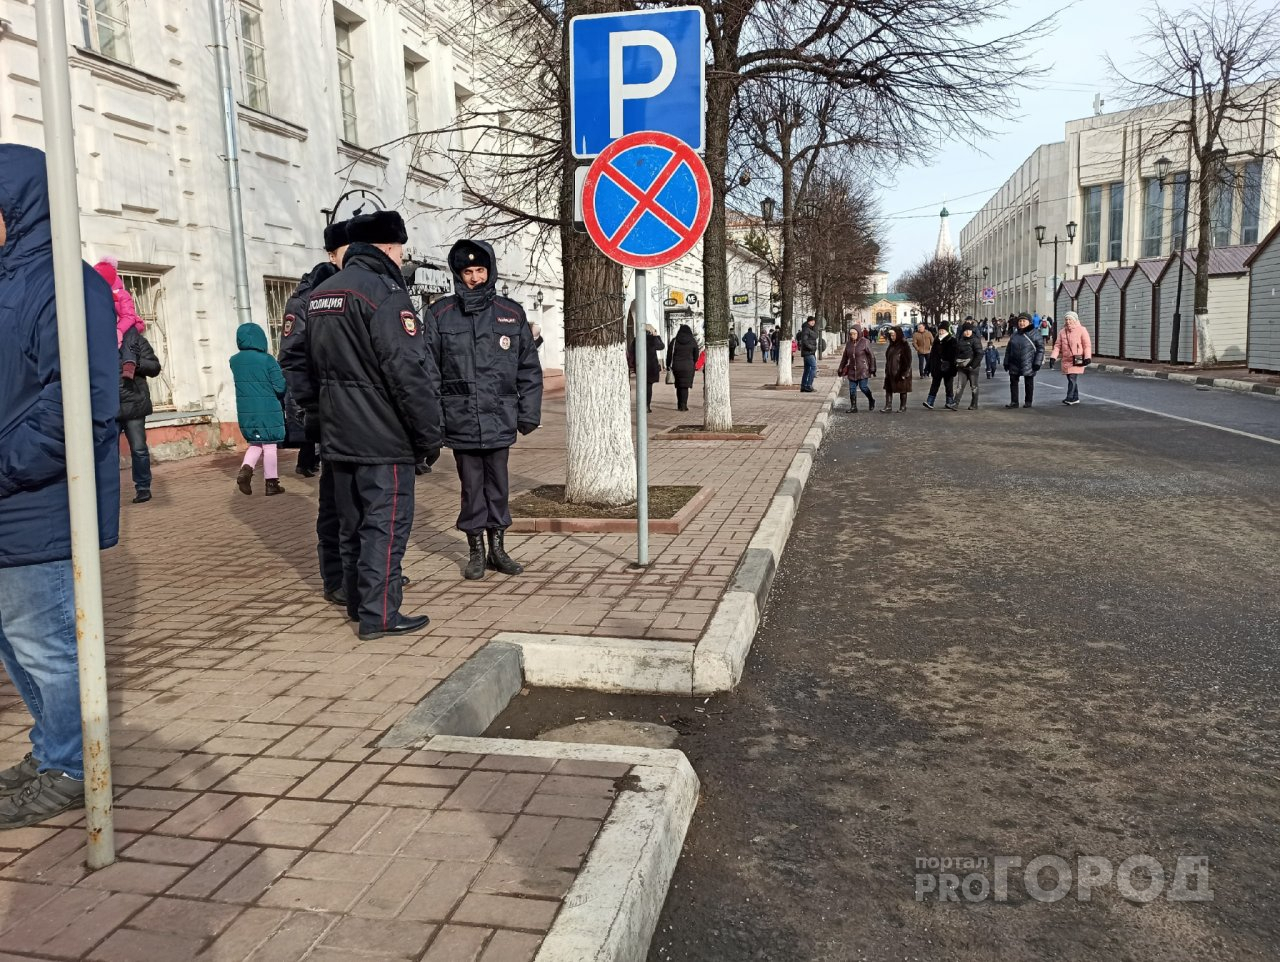 Ярославцев на самоизоляции из-за коронавируса чиновники проверяют с полицией